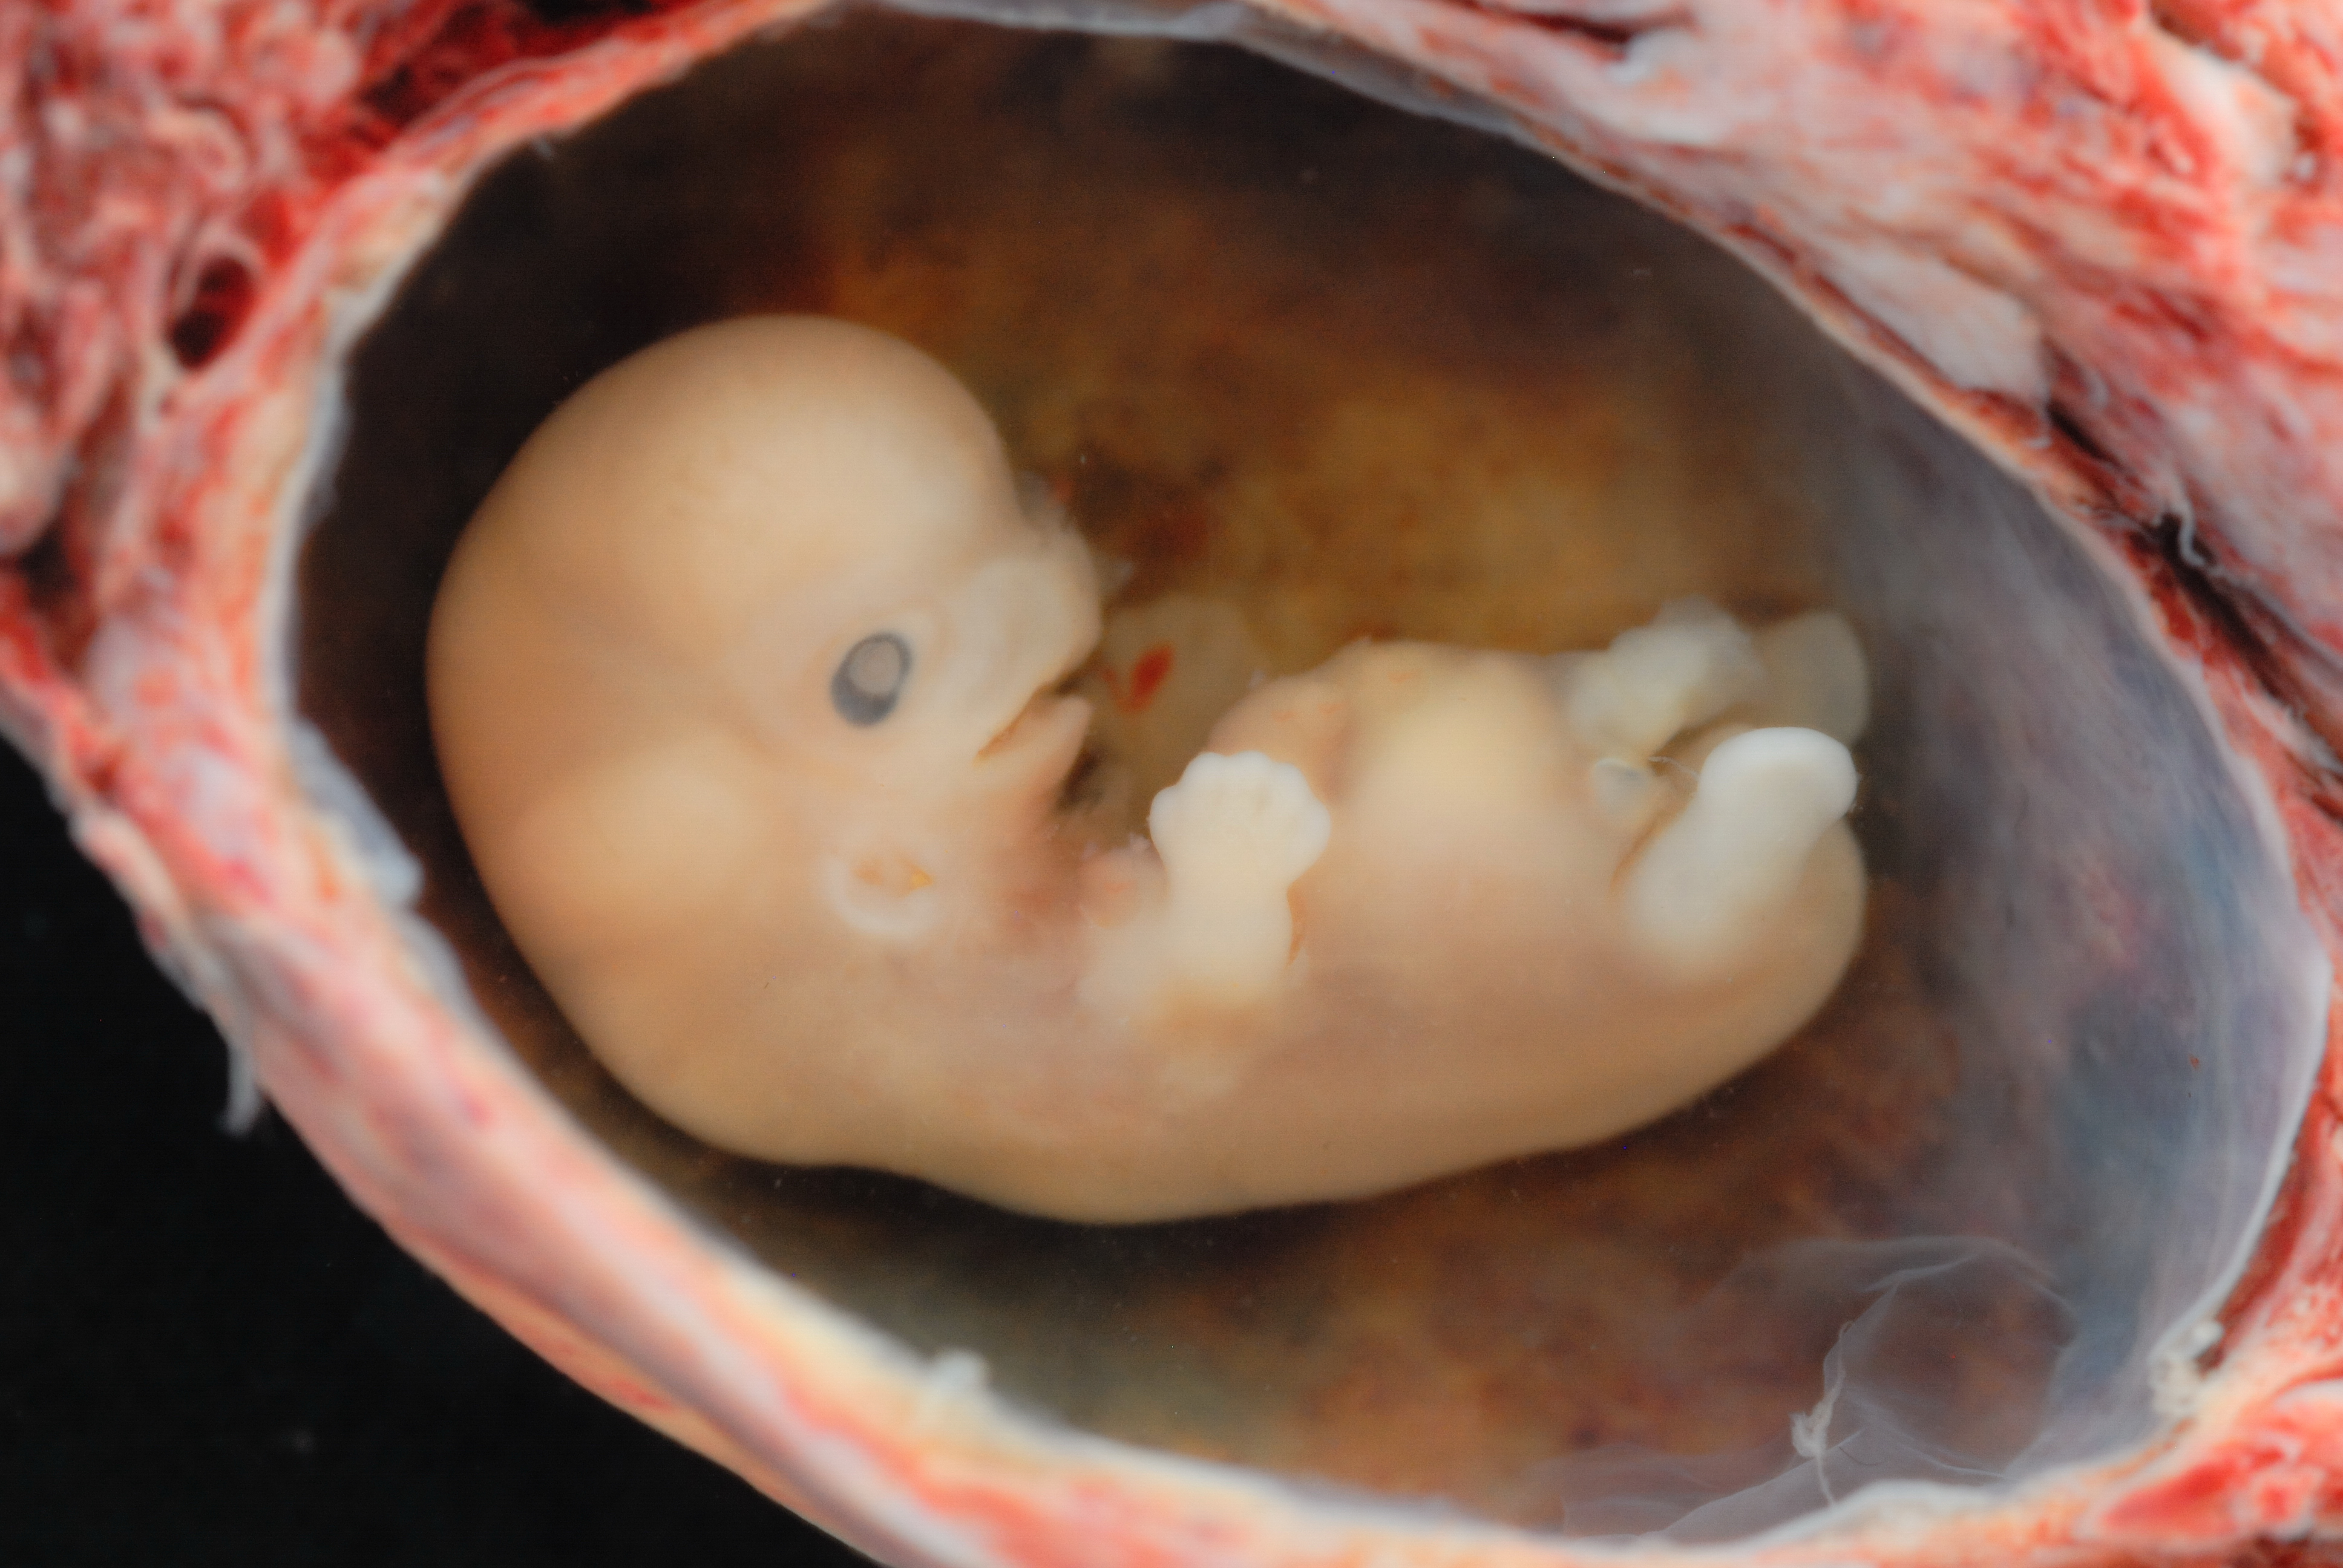 https://arquimedia.s3.amazonaws.com/27/formacion/embrion-humano-01jpg.jpg